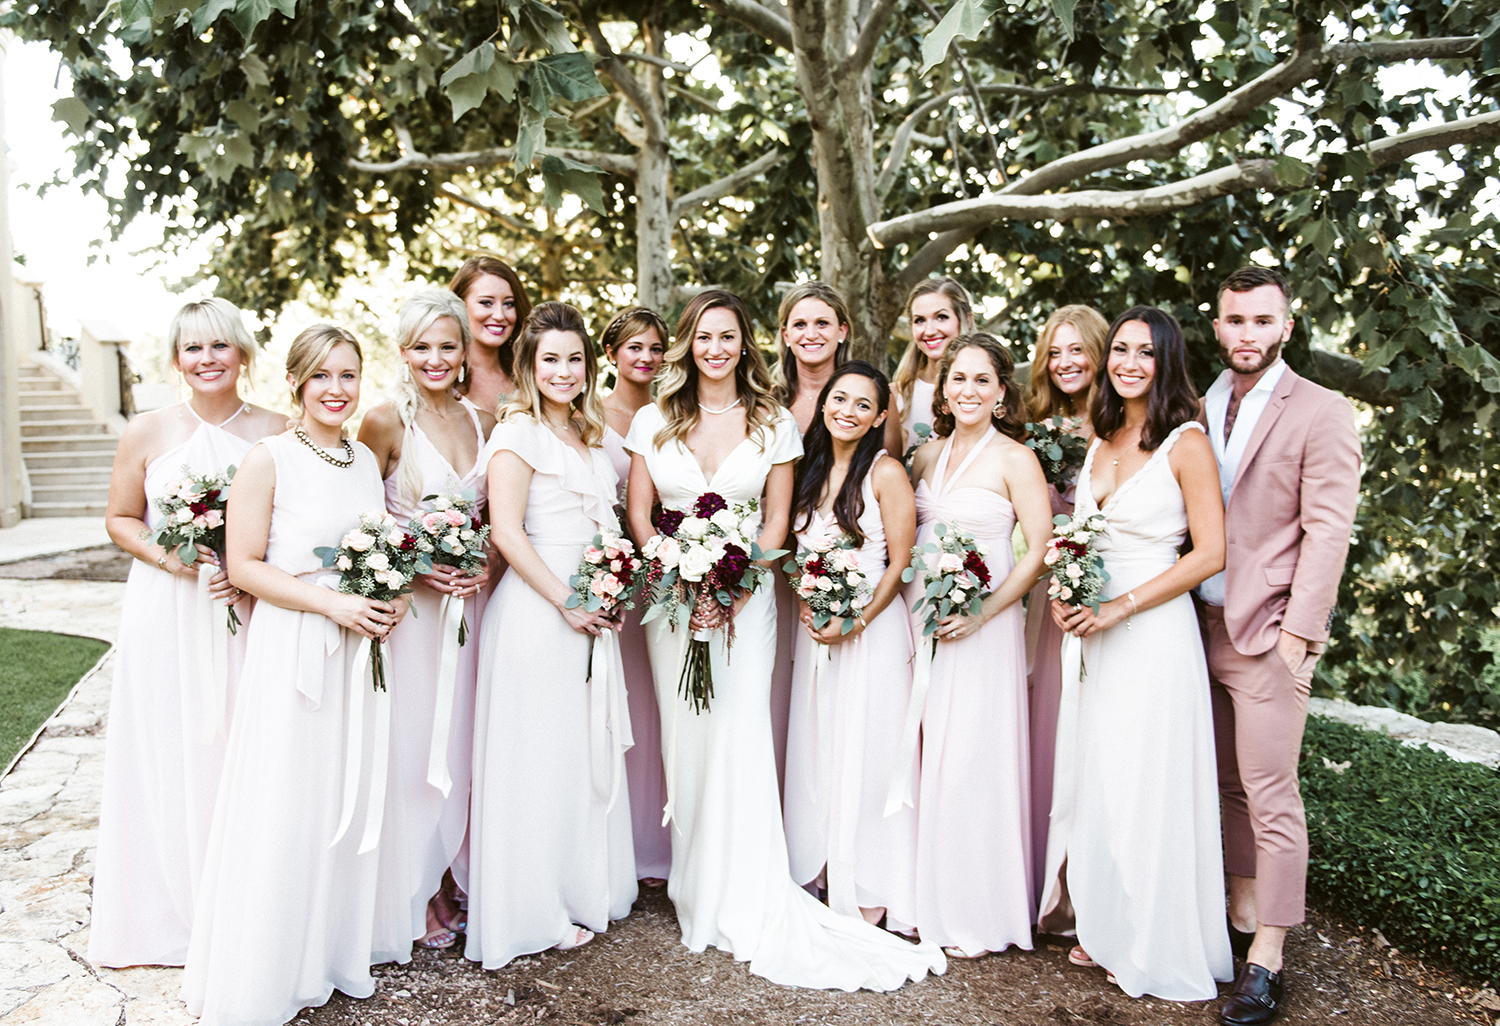 livvyland-blog-olivia-watson-wedding-villa-del-lago-austin-texas-fall-blush-burgundy-classic-romantic-joanna-august-bridesmaid-dresses-2